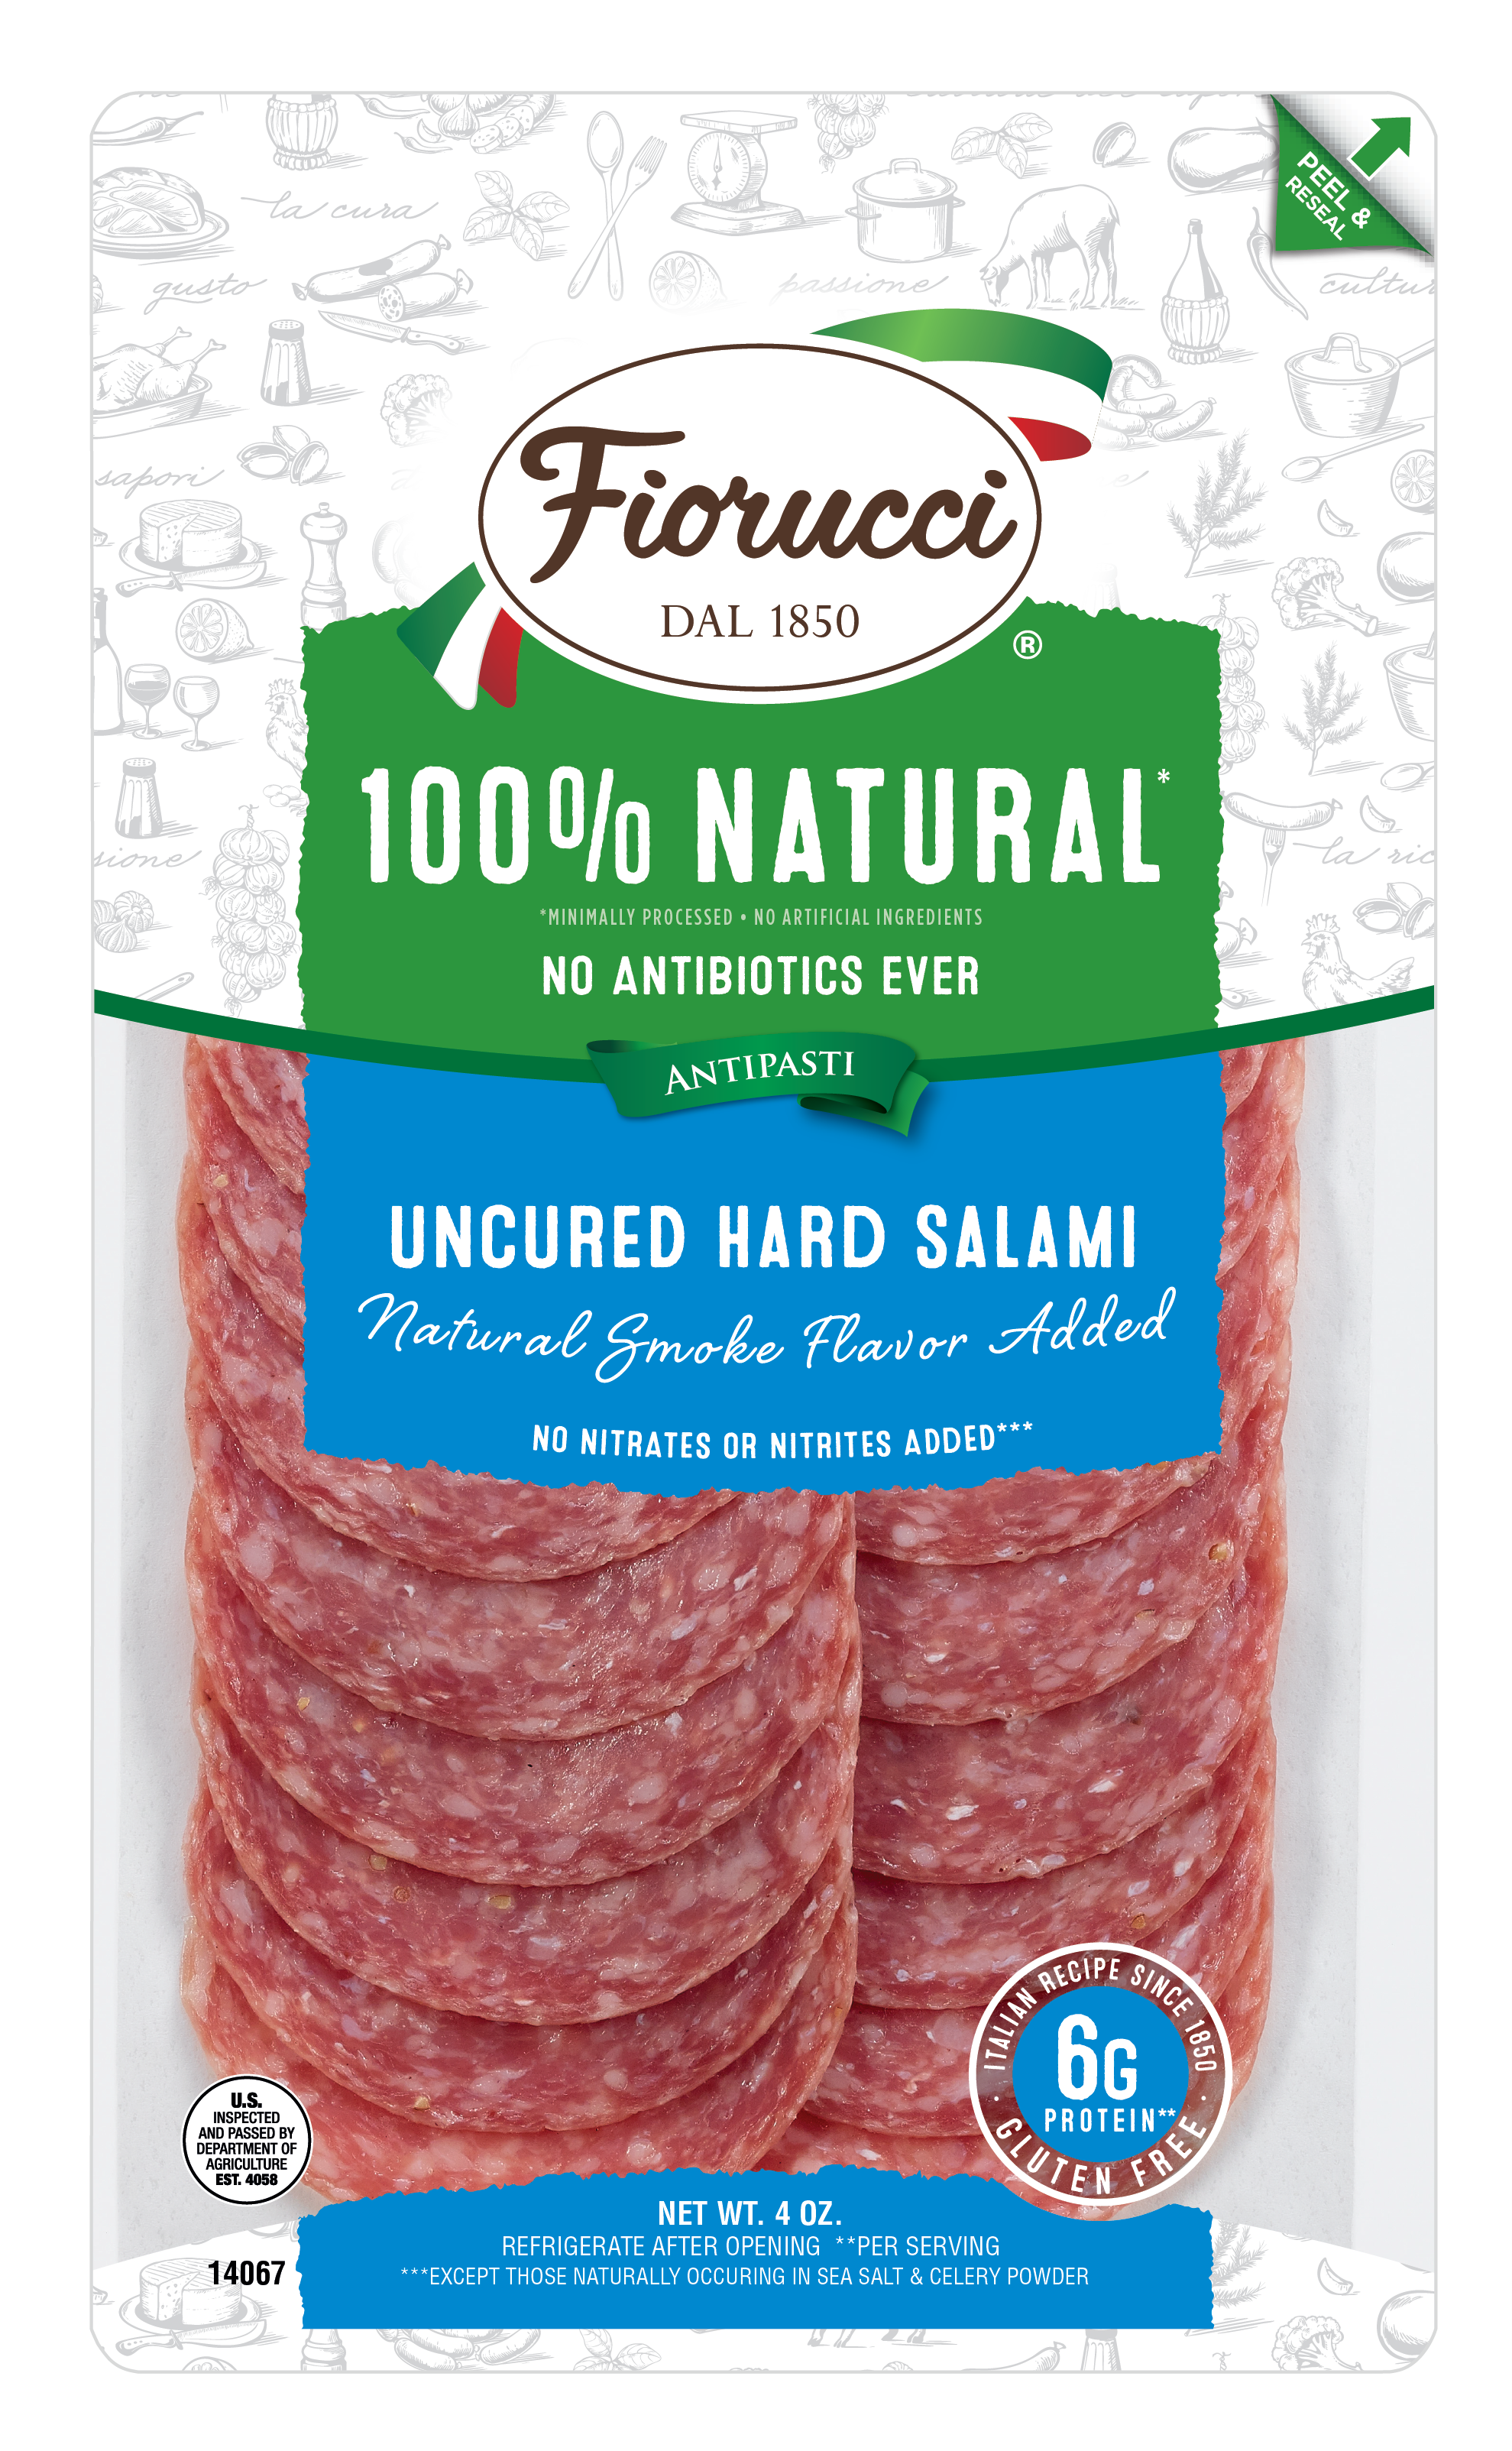 Uncured Hard Salami